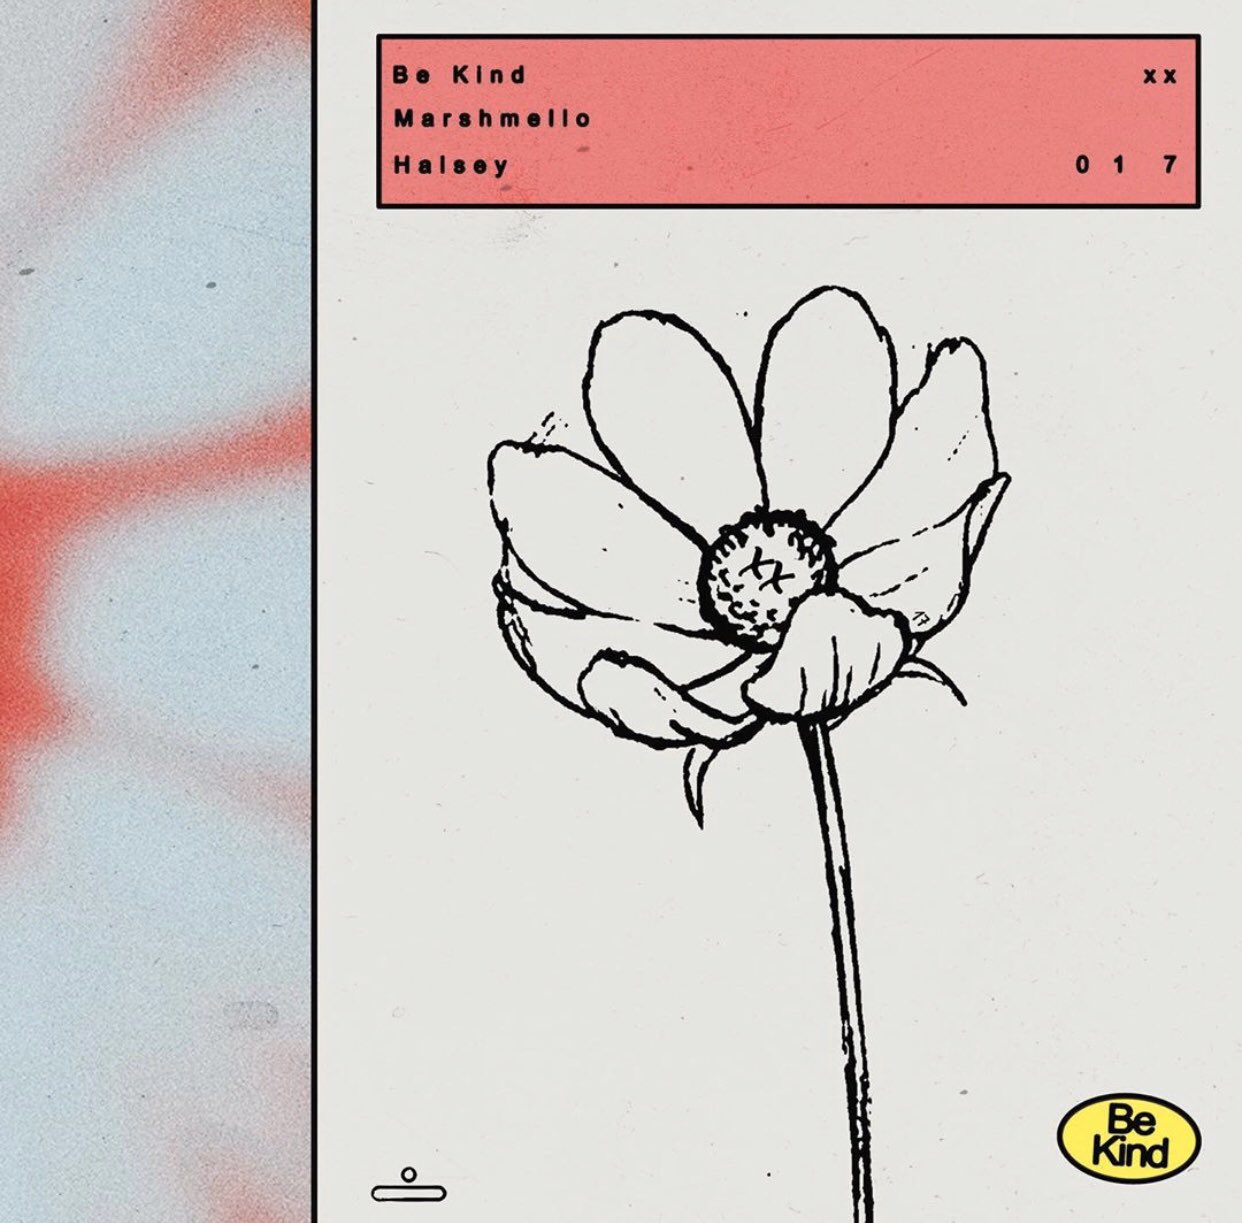 New Music: Halsey and Marshmello’s heartfelt new single ‘Be Kind’. Listen Here: - 10 MUGIBSON